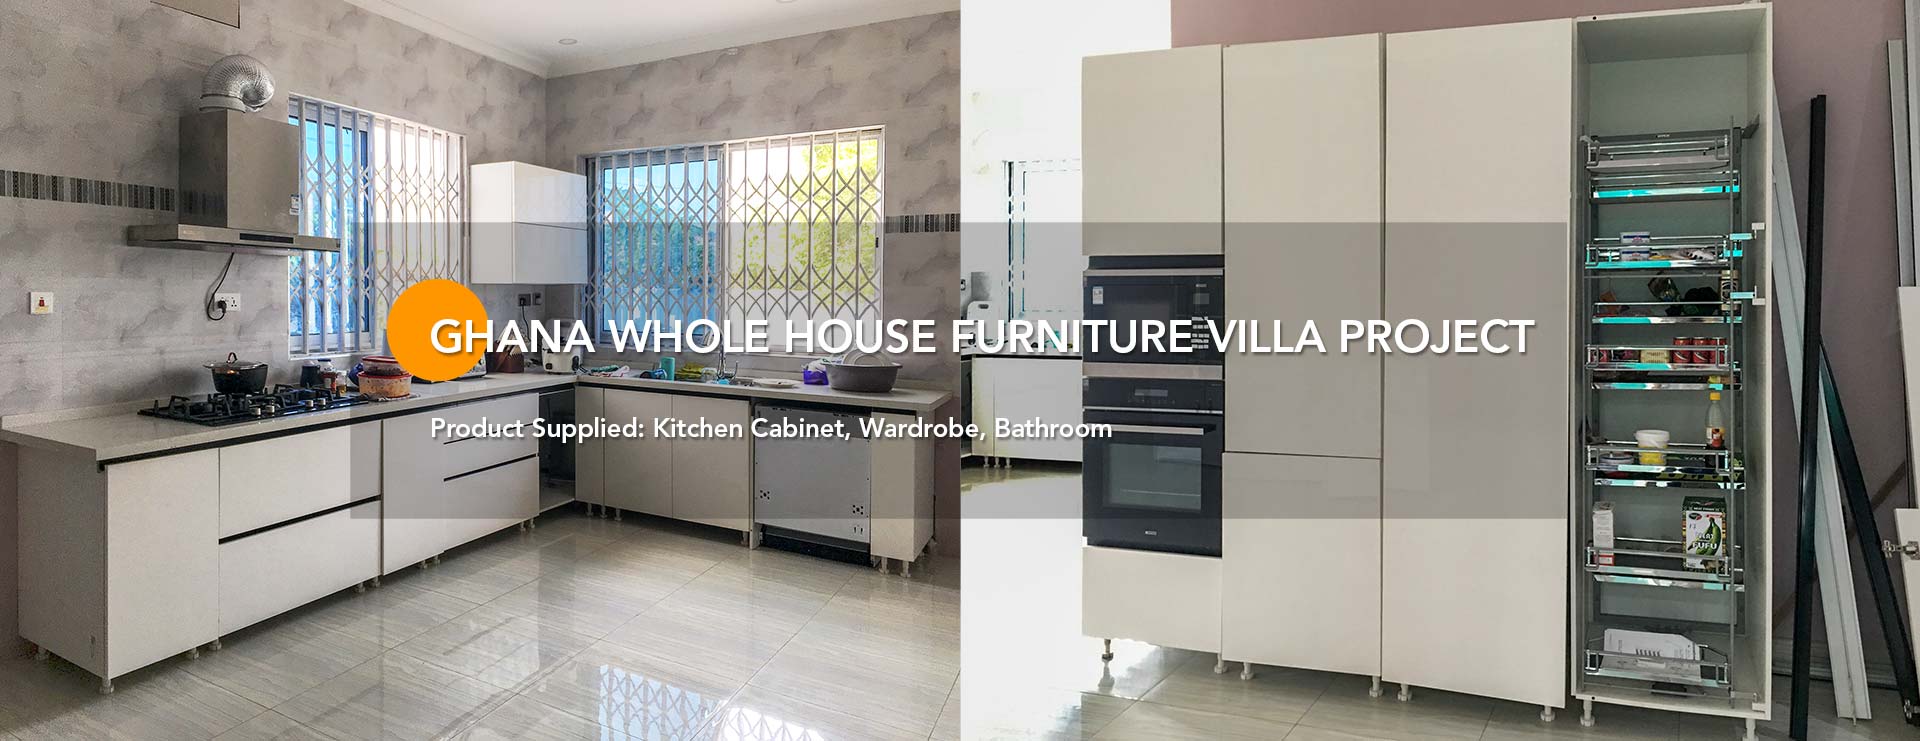 Ghana-Whole-House-Furniture-Villa-Project (3)